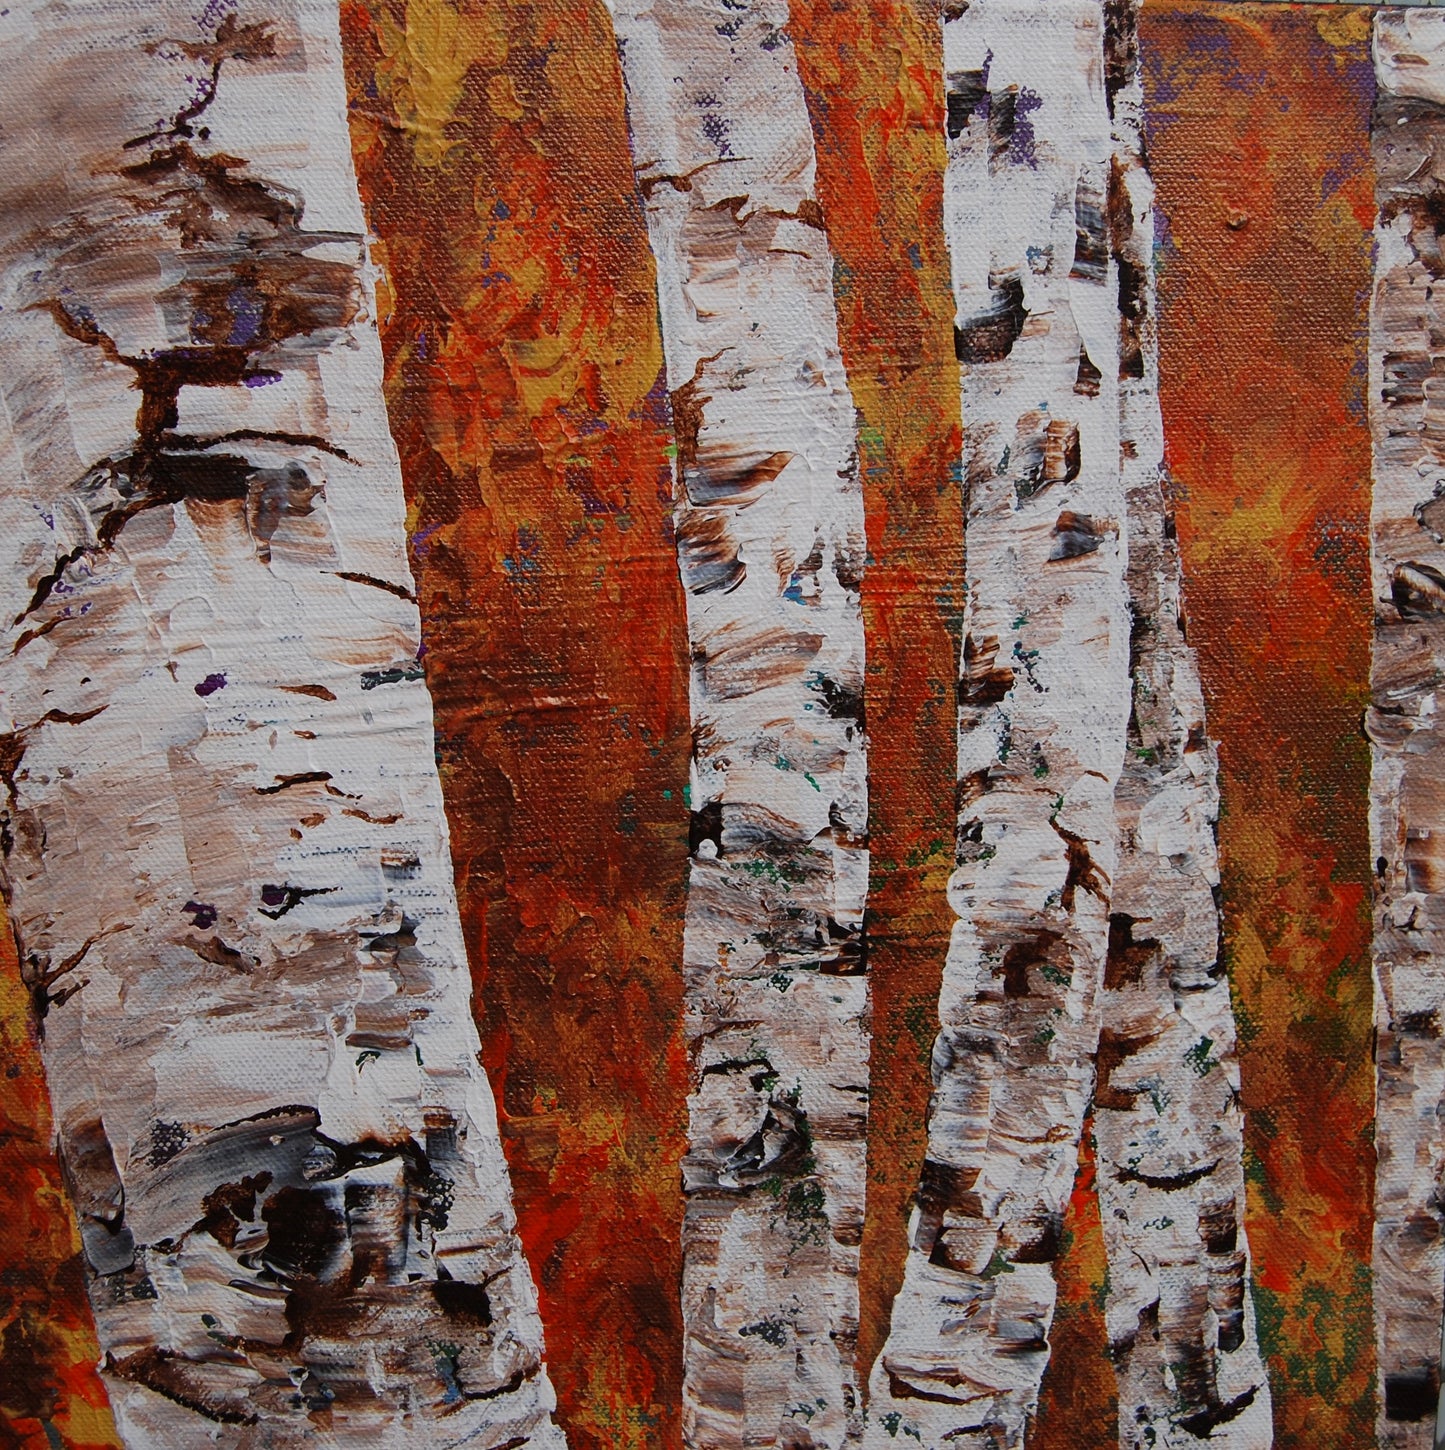 8X8 Inch Canvas Art Print: Birch Trees Orange